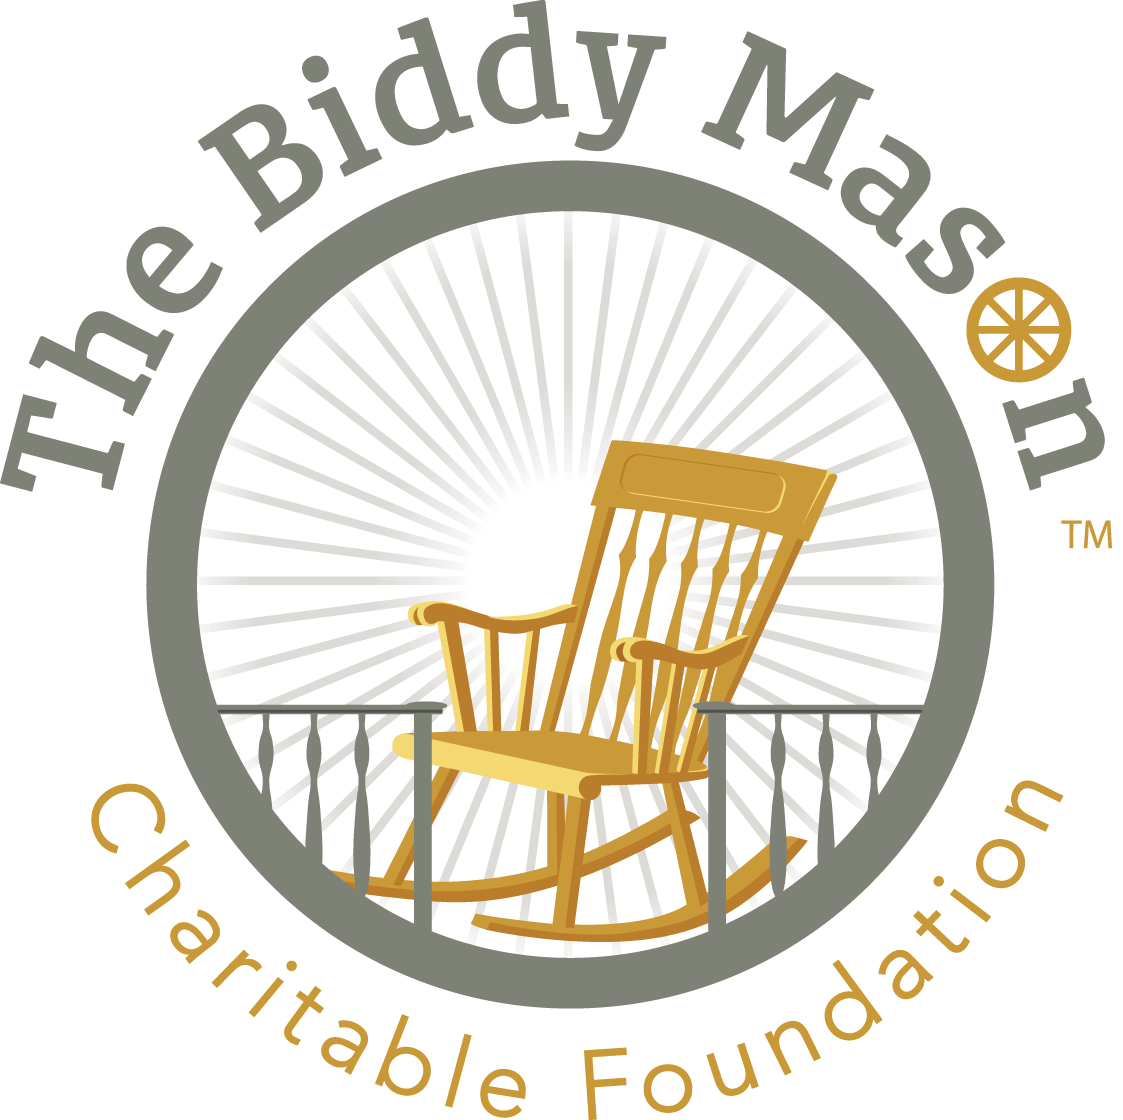 Biddy Mason Charitable Foundation